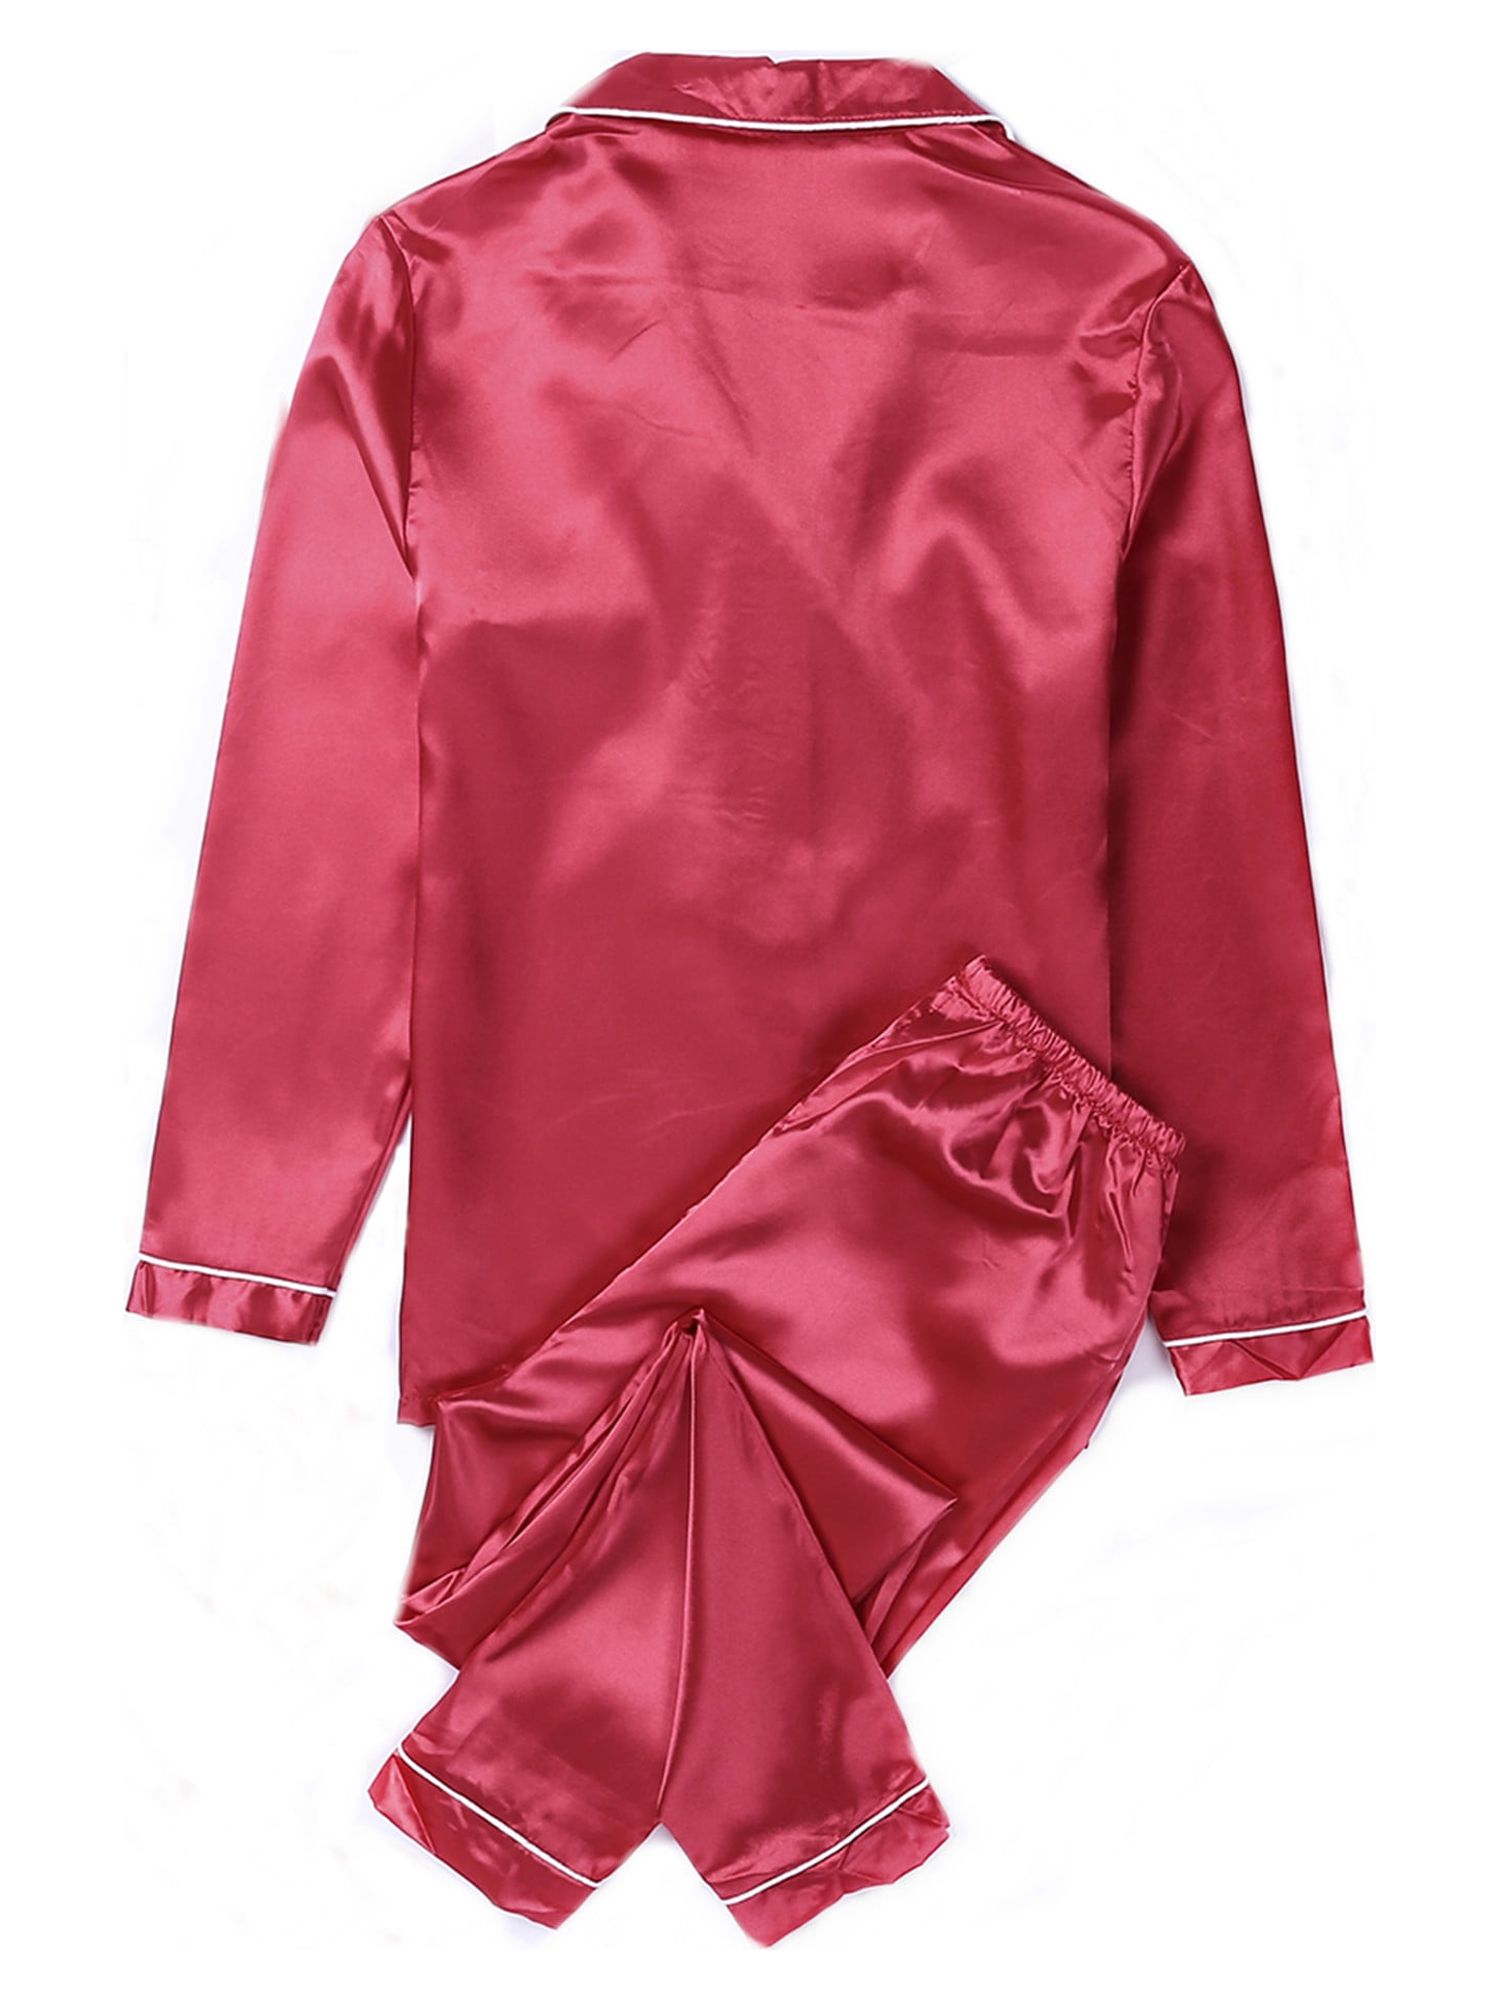 EYIIYE Women Silk Satin Button Long Sleeve Pajamas Pyjamas Loungewear Sleepwear Sets S-XL - image 4 of 7